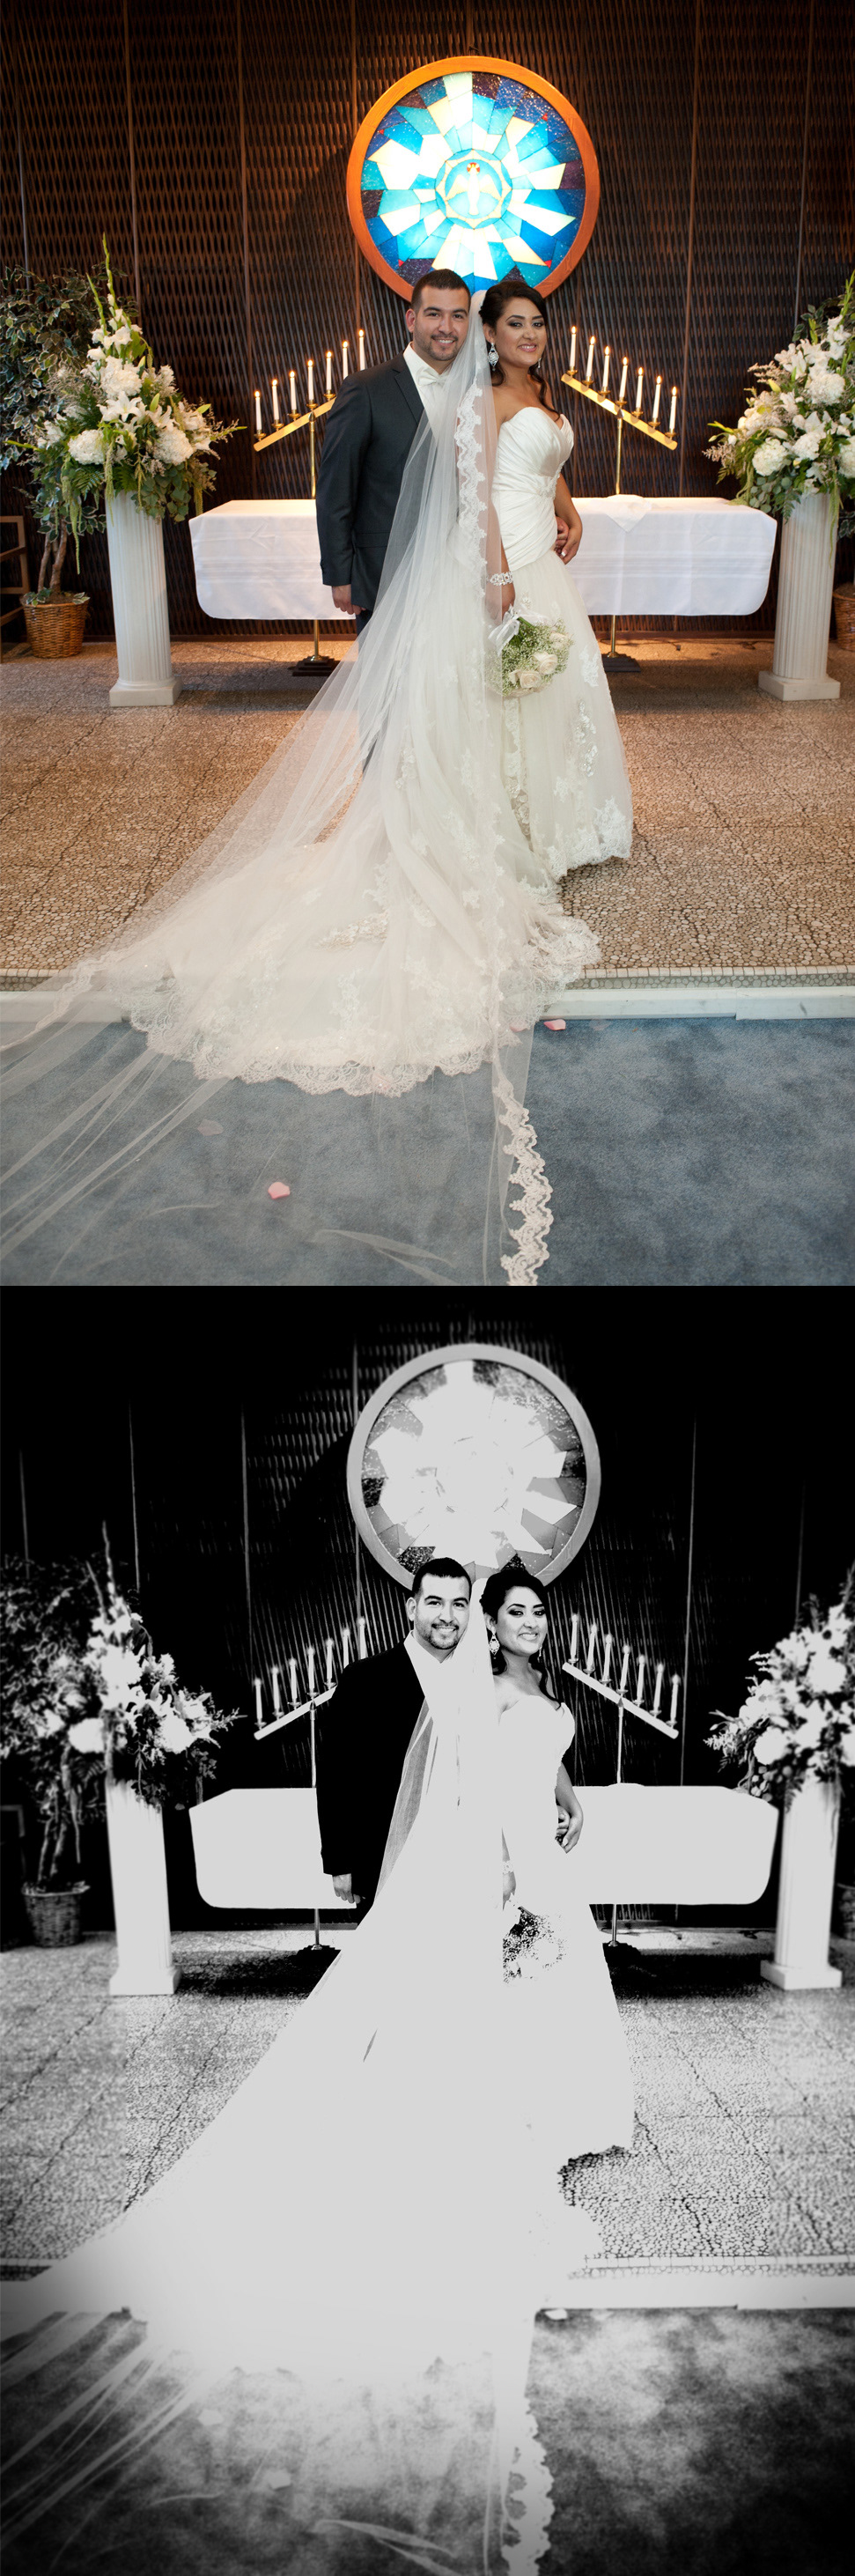 wedding photo shoot edit design Love